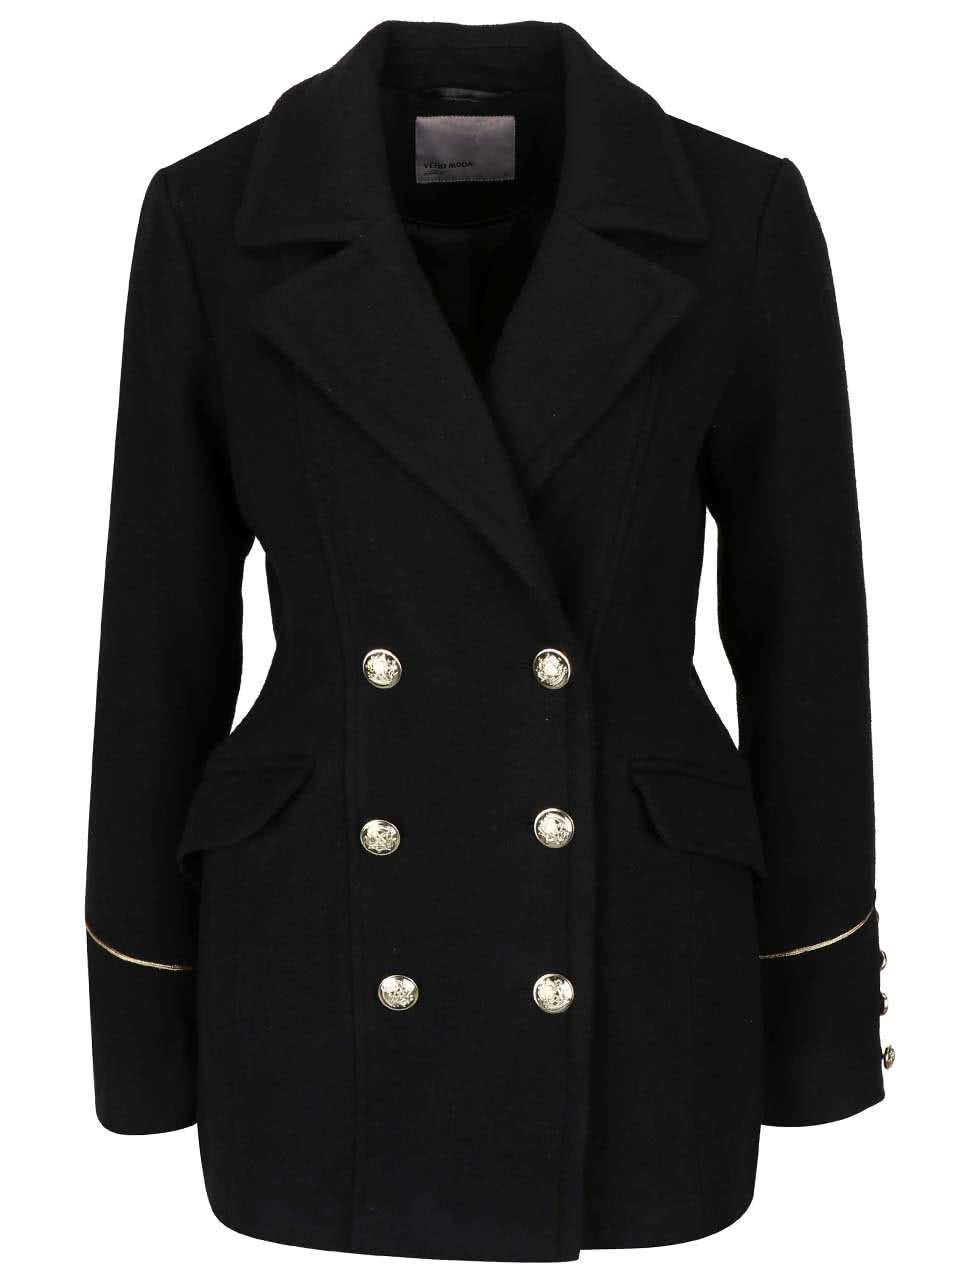 Černý dvouřadý kabát s detaily ve zlaté barvě Vero Moda Sweety